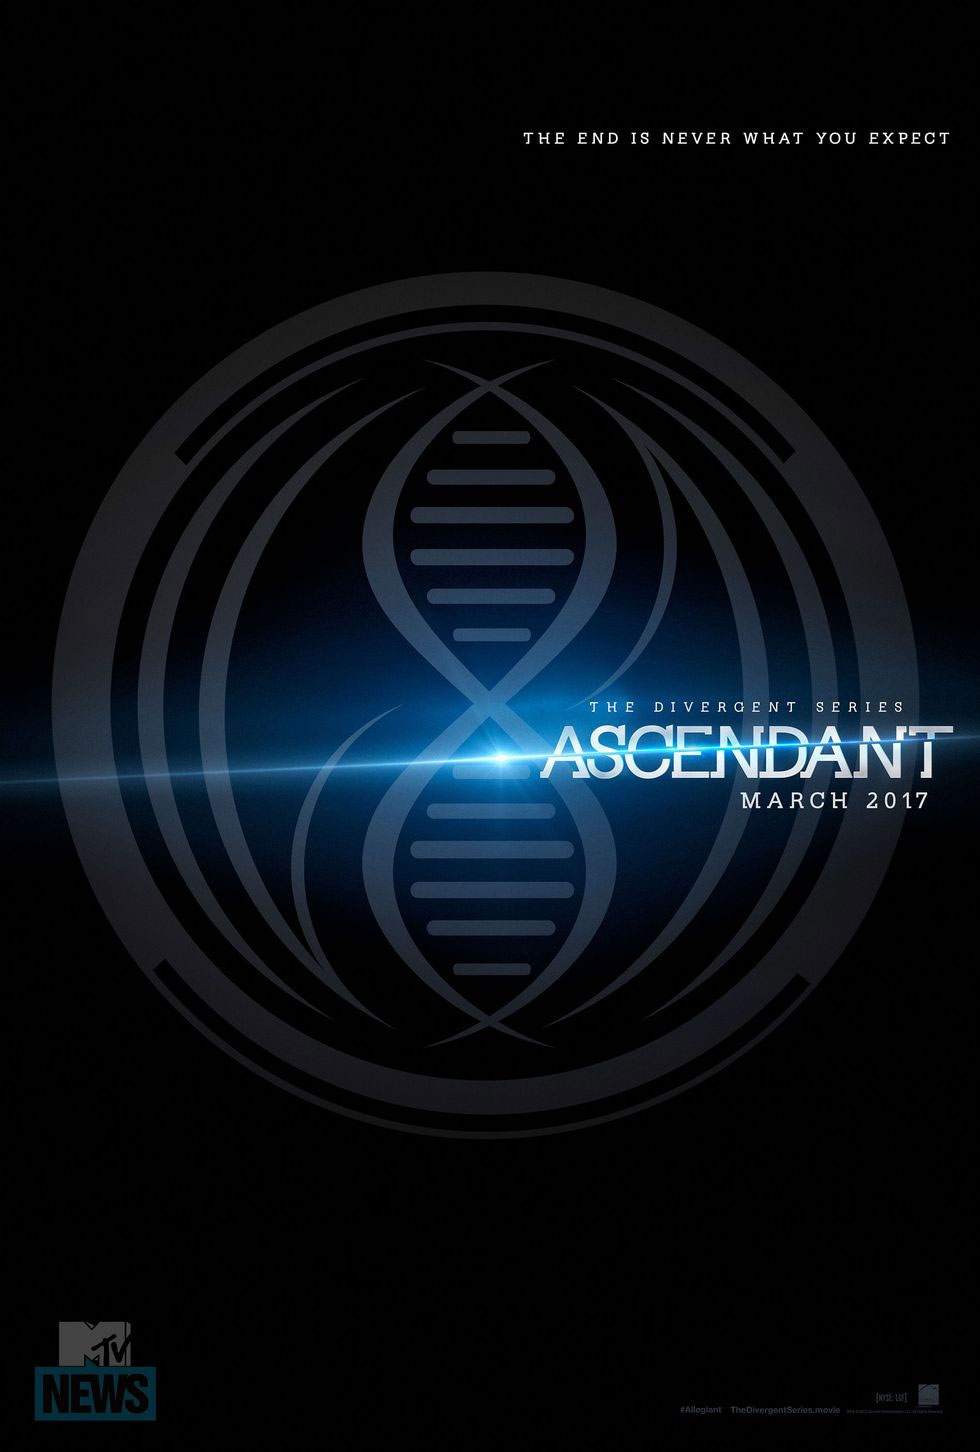  The Divergent Series: Ascendant (2017) Poster 